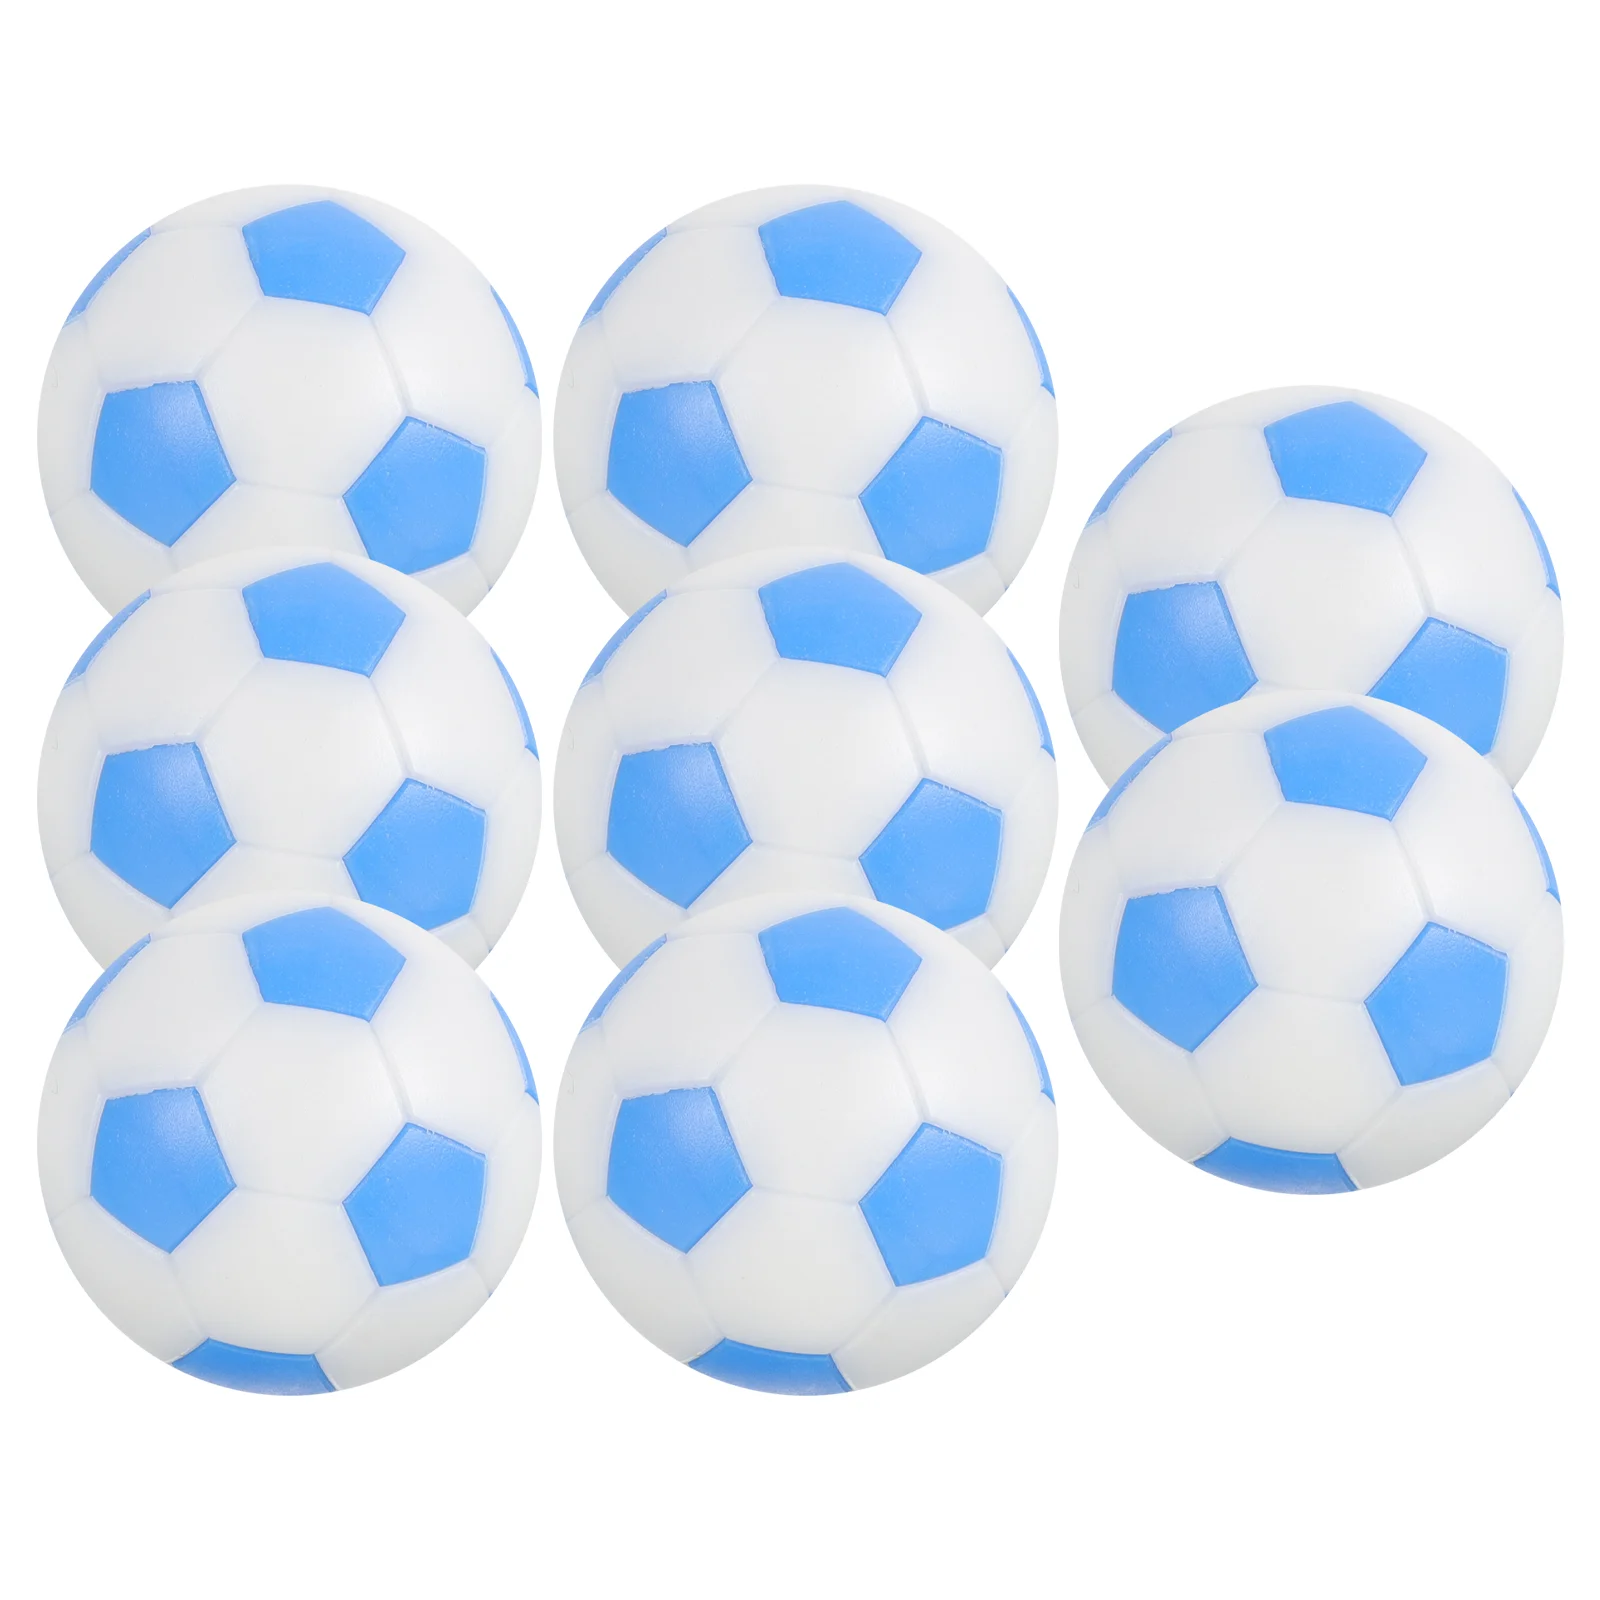 

8pcs Table Soccer Foosball Replacement Balls Mini Official Tabletop Foosball Game Mini Balls